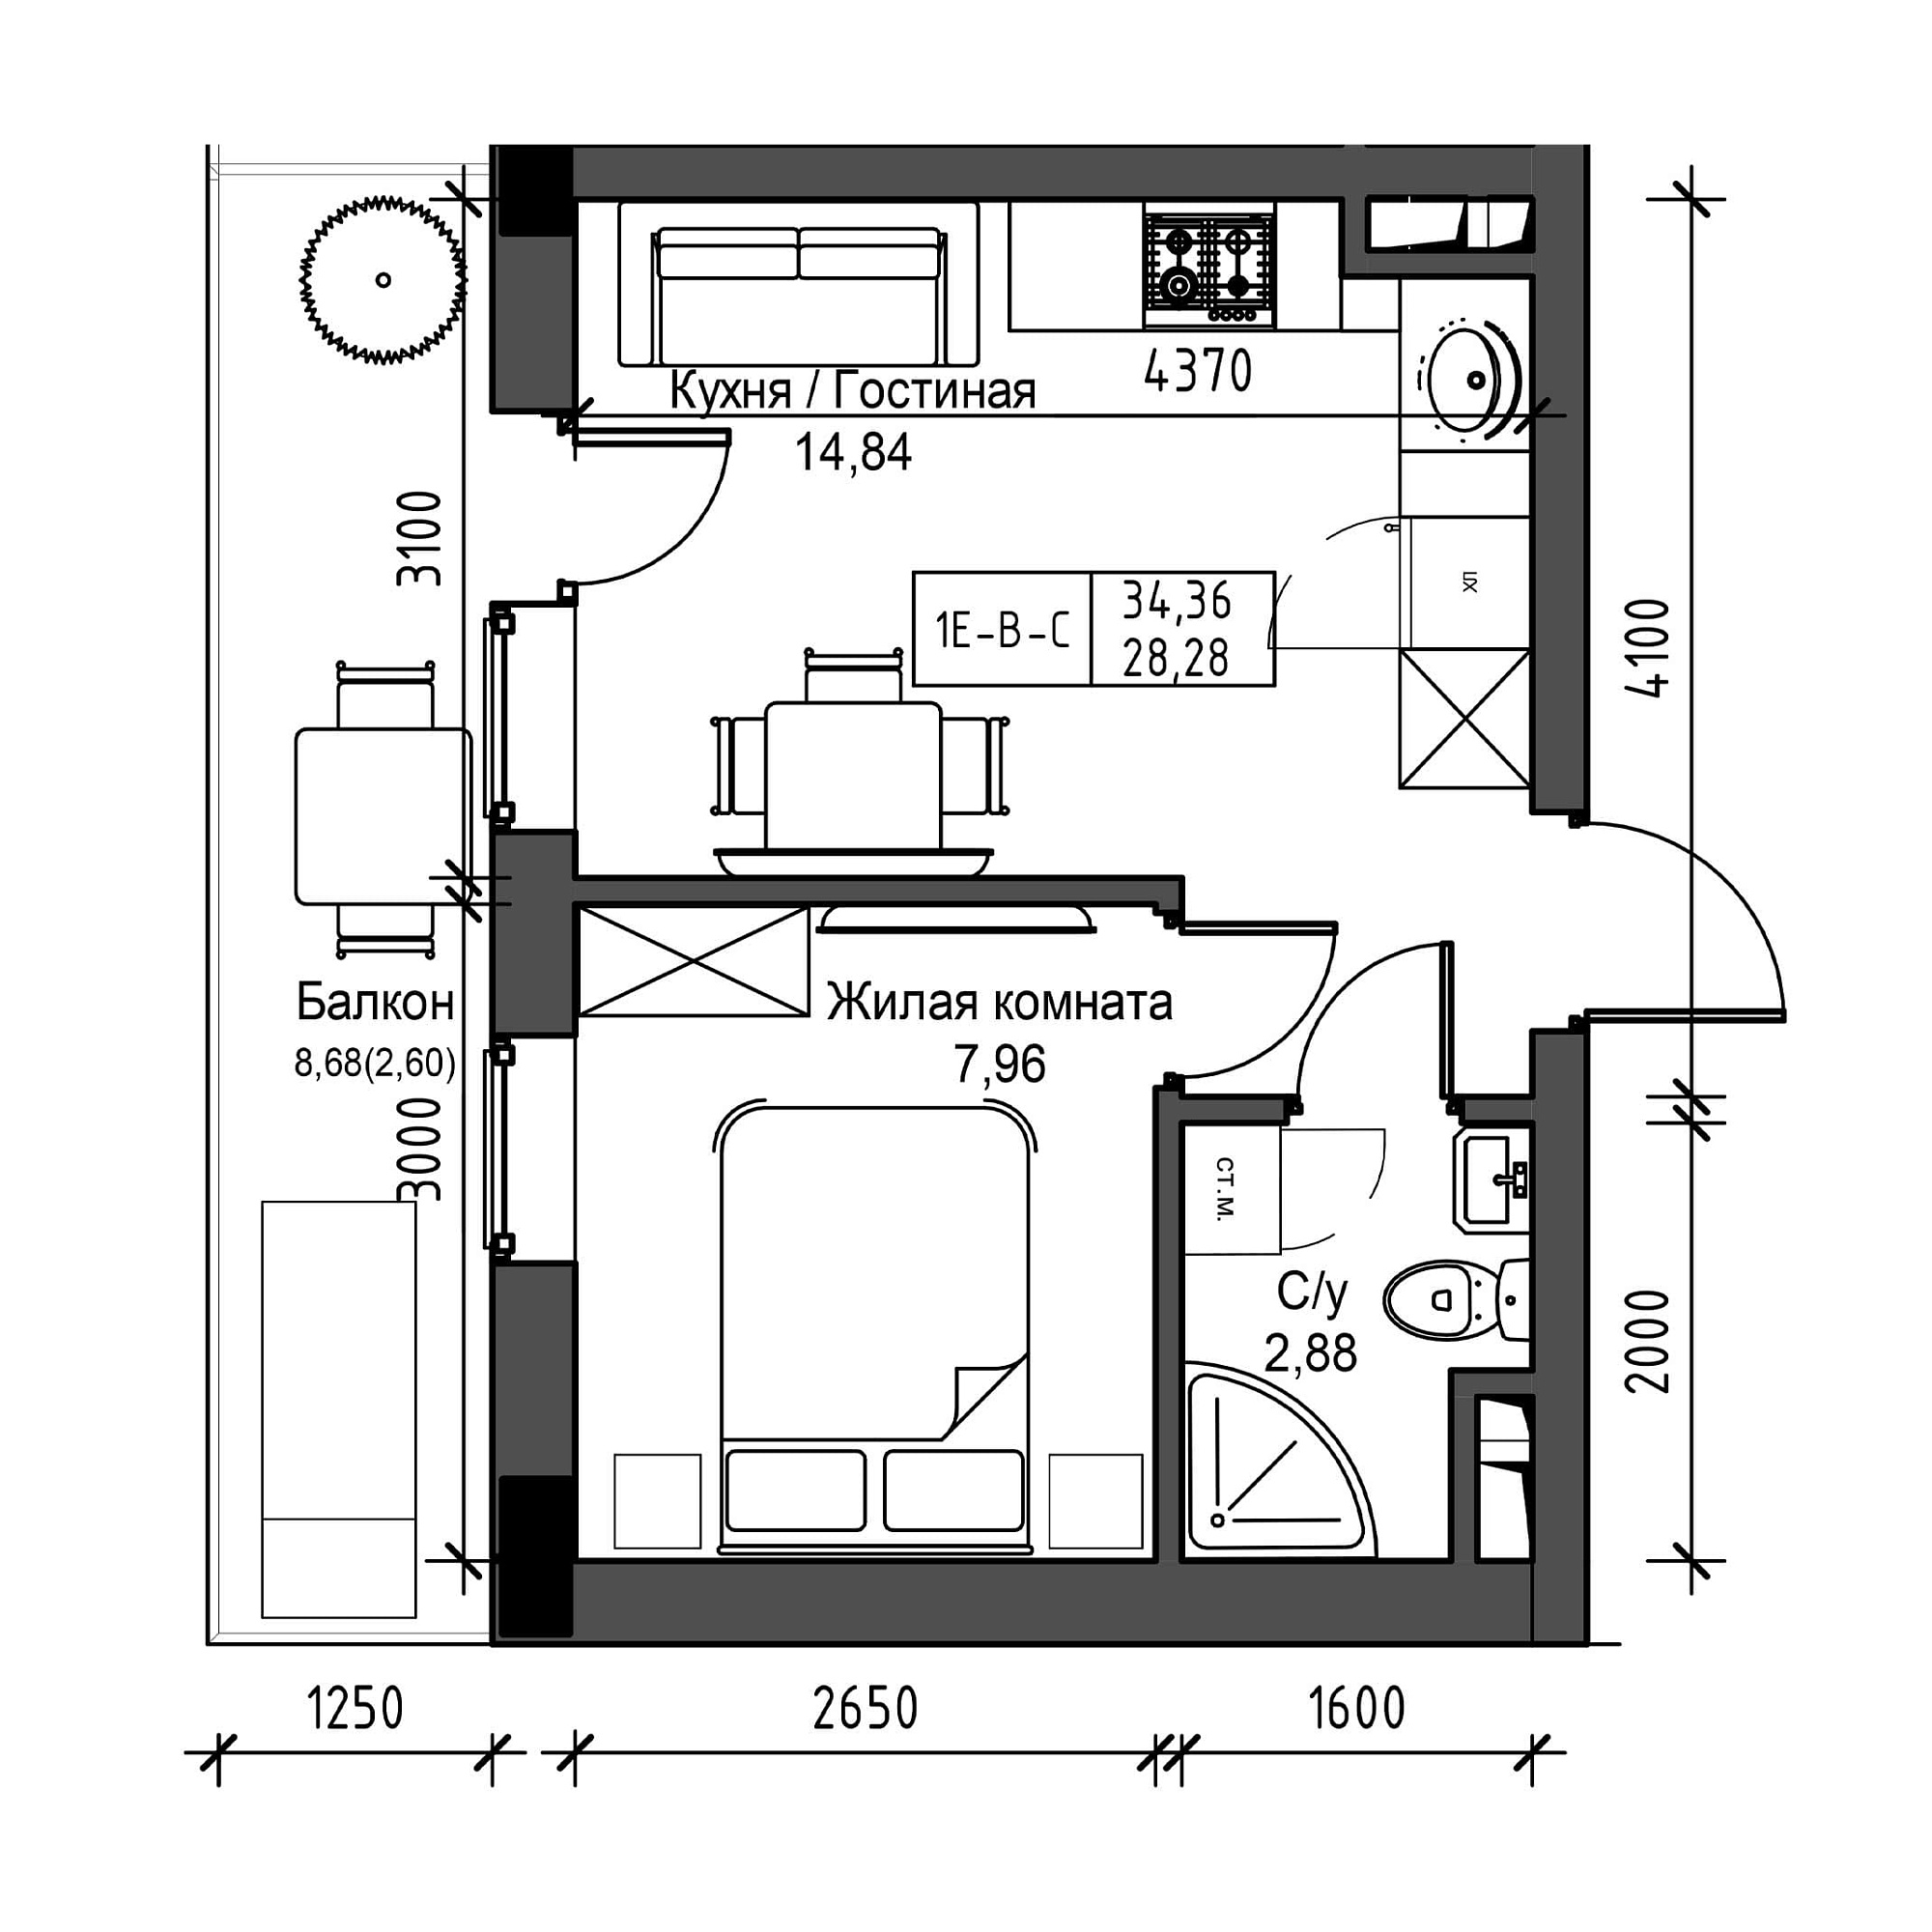 Планування 1-к квартира площею 28.28м2, UM-001-07/0014.